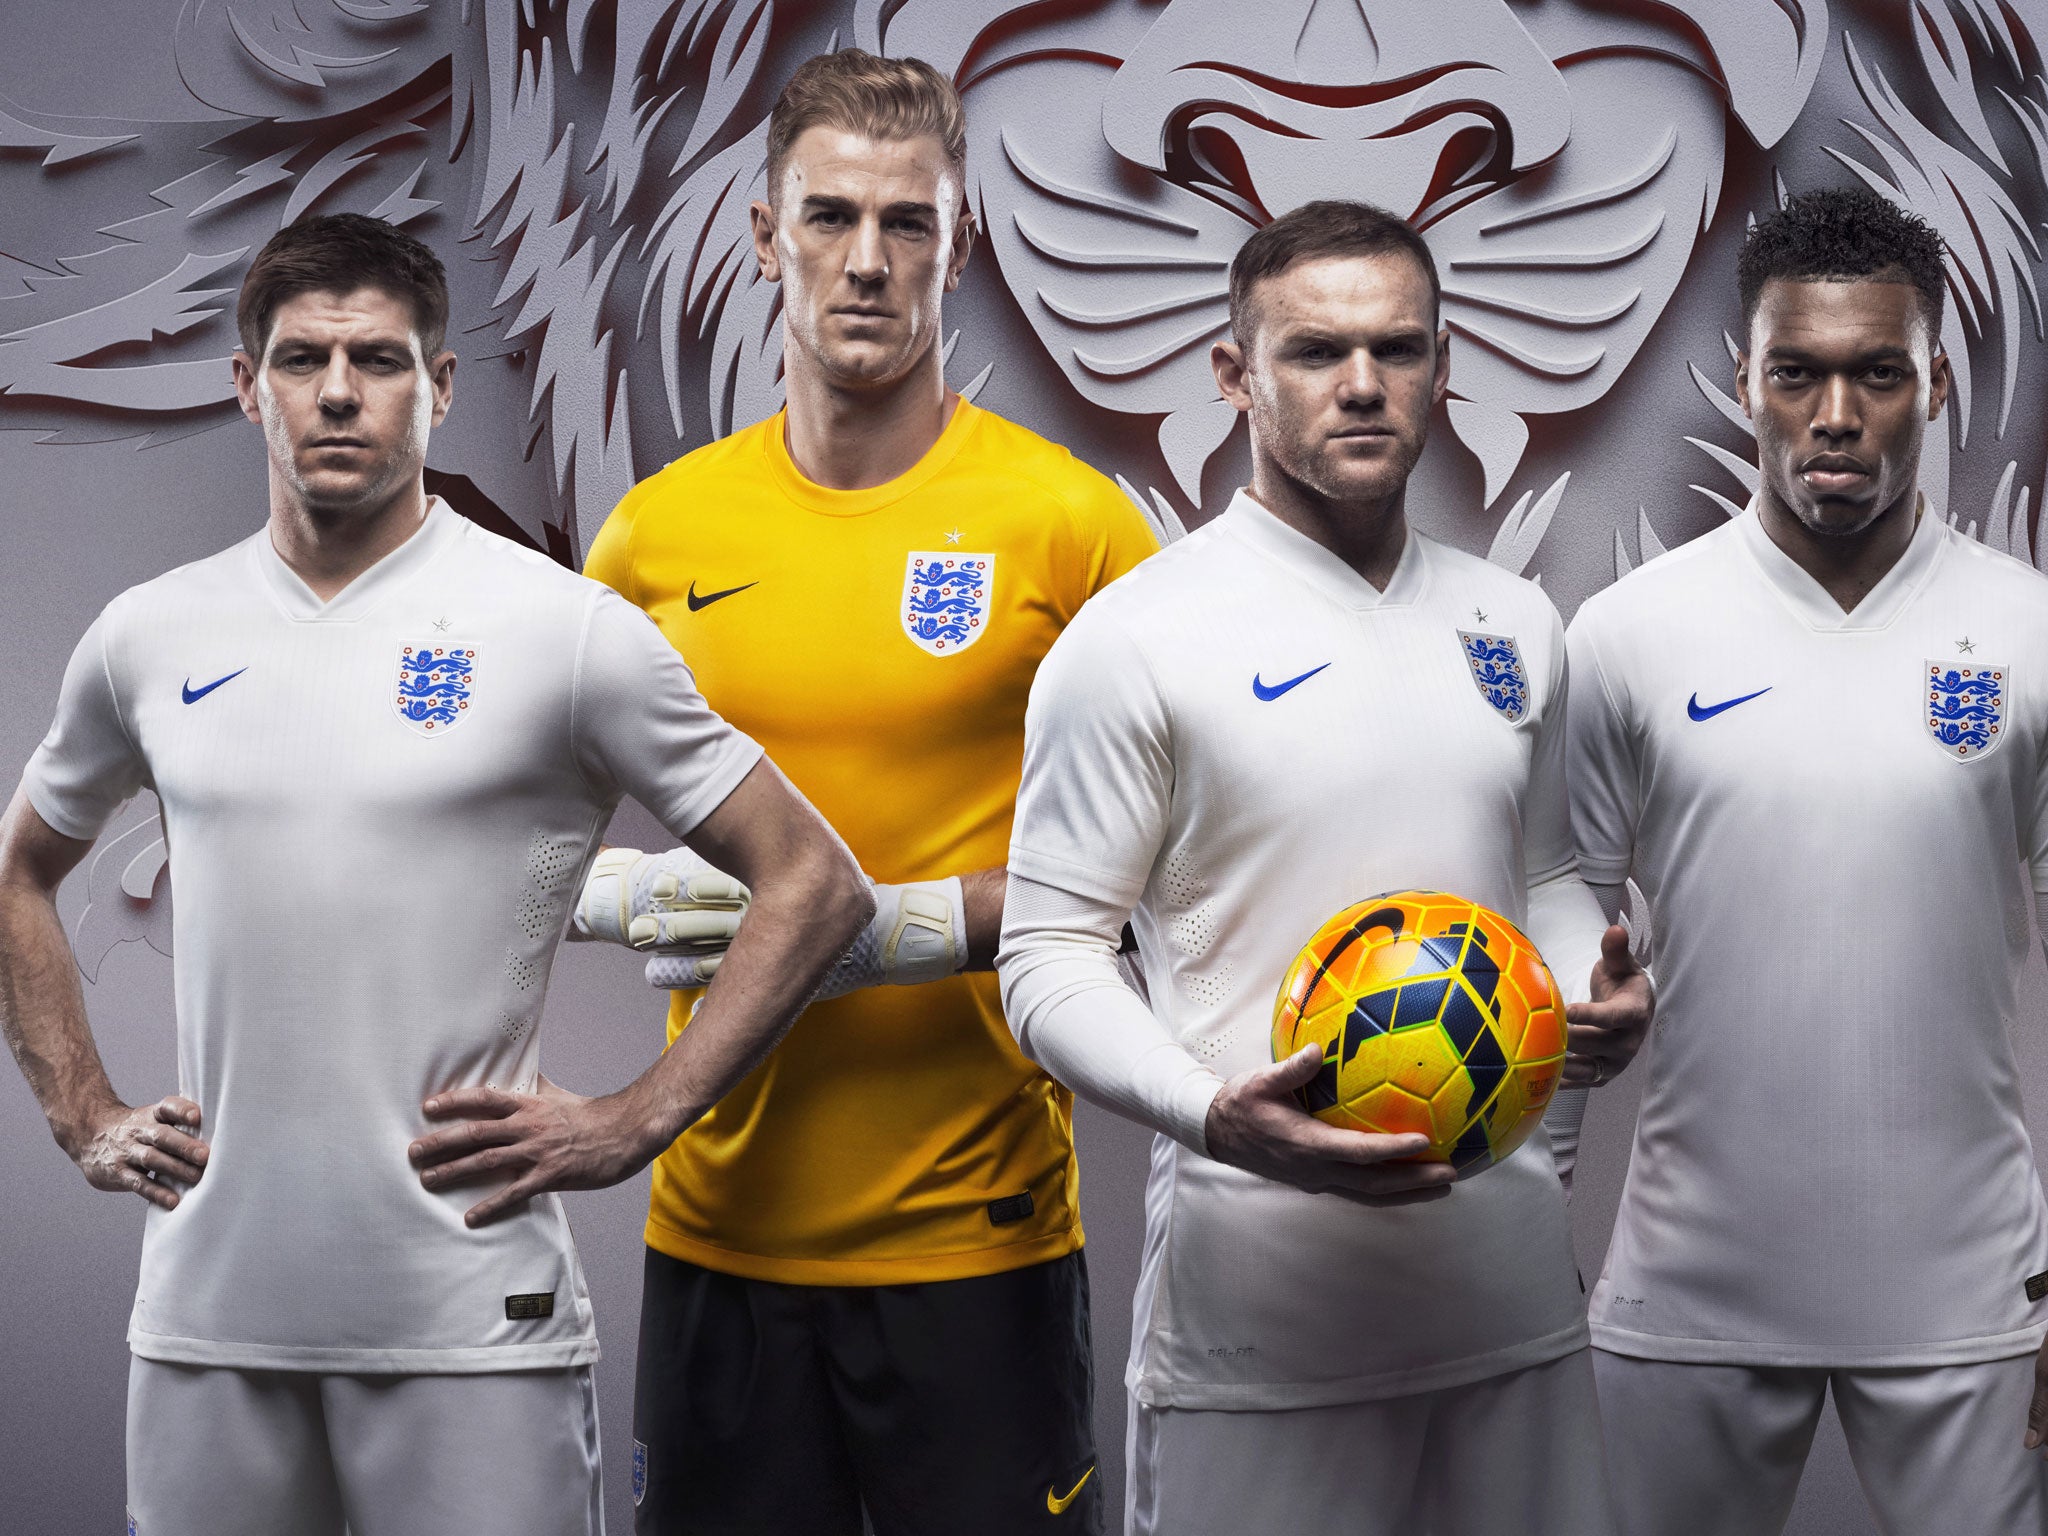 Right to left: Steven Gerrard, Joe Hart, Wayne Rooney and Daniel Sturridge unveil the home shirt